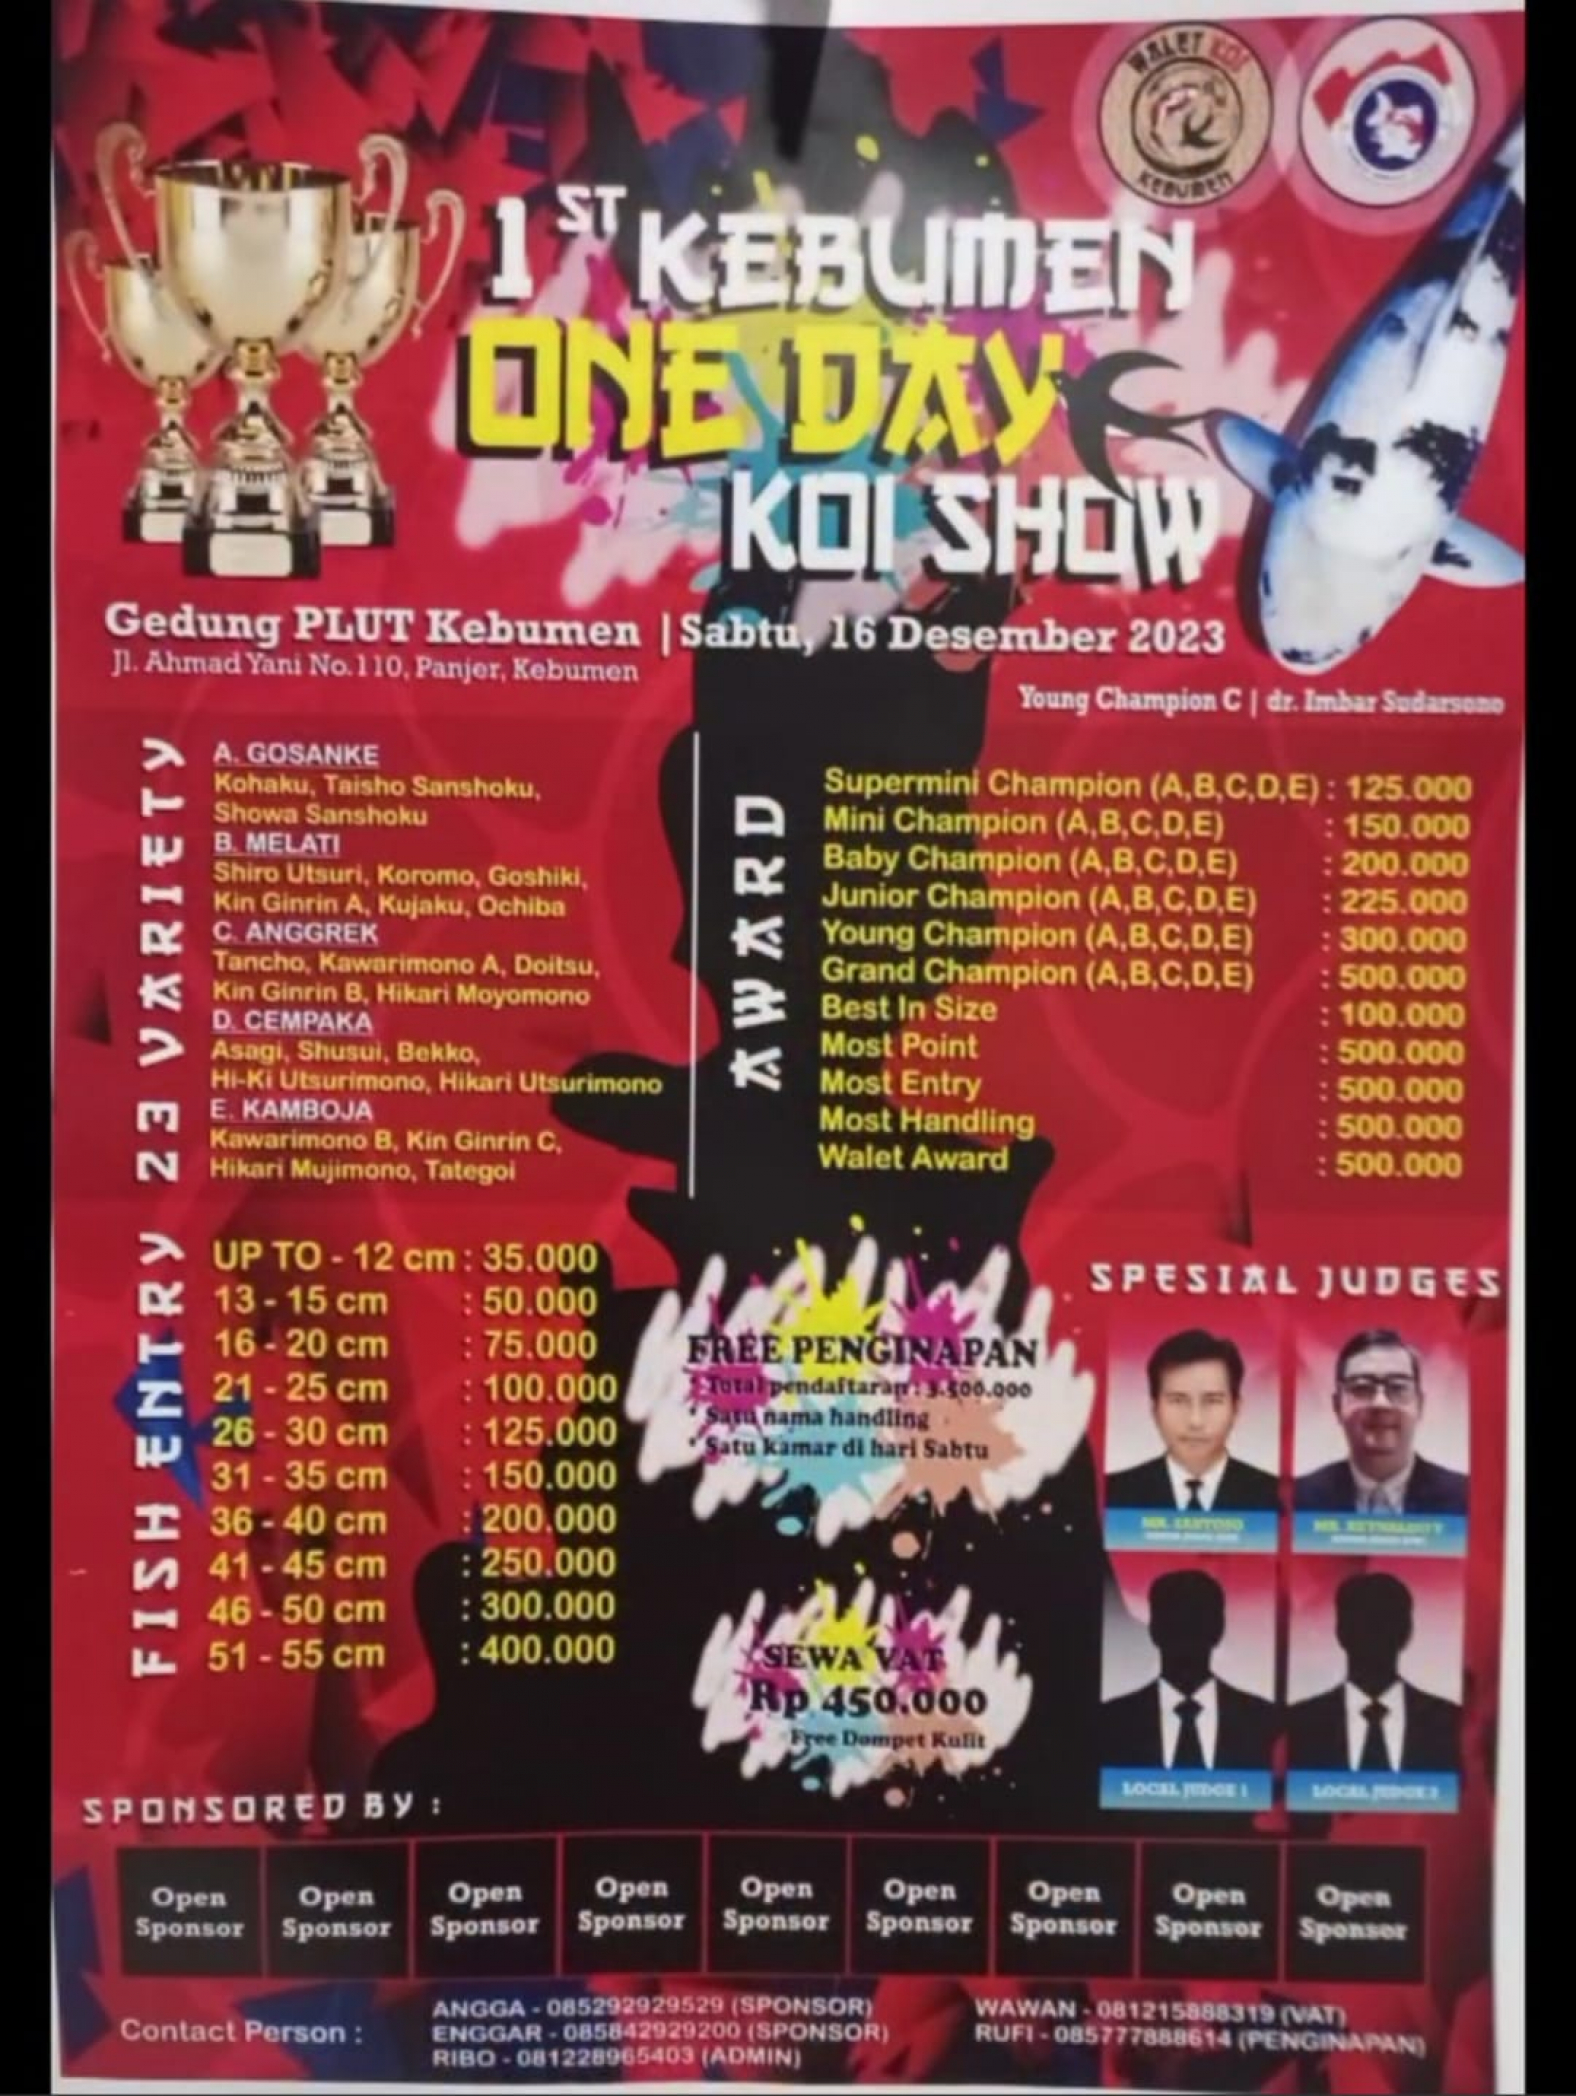 1st KEBUMEN One Day Koi Show